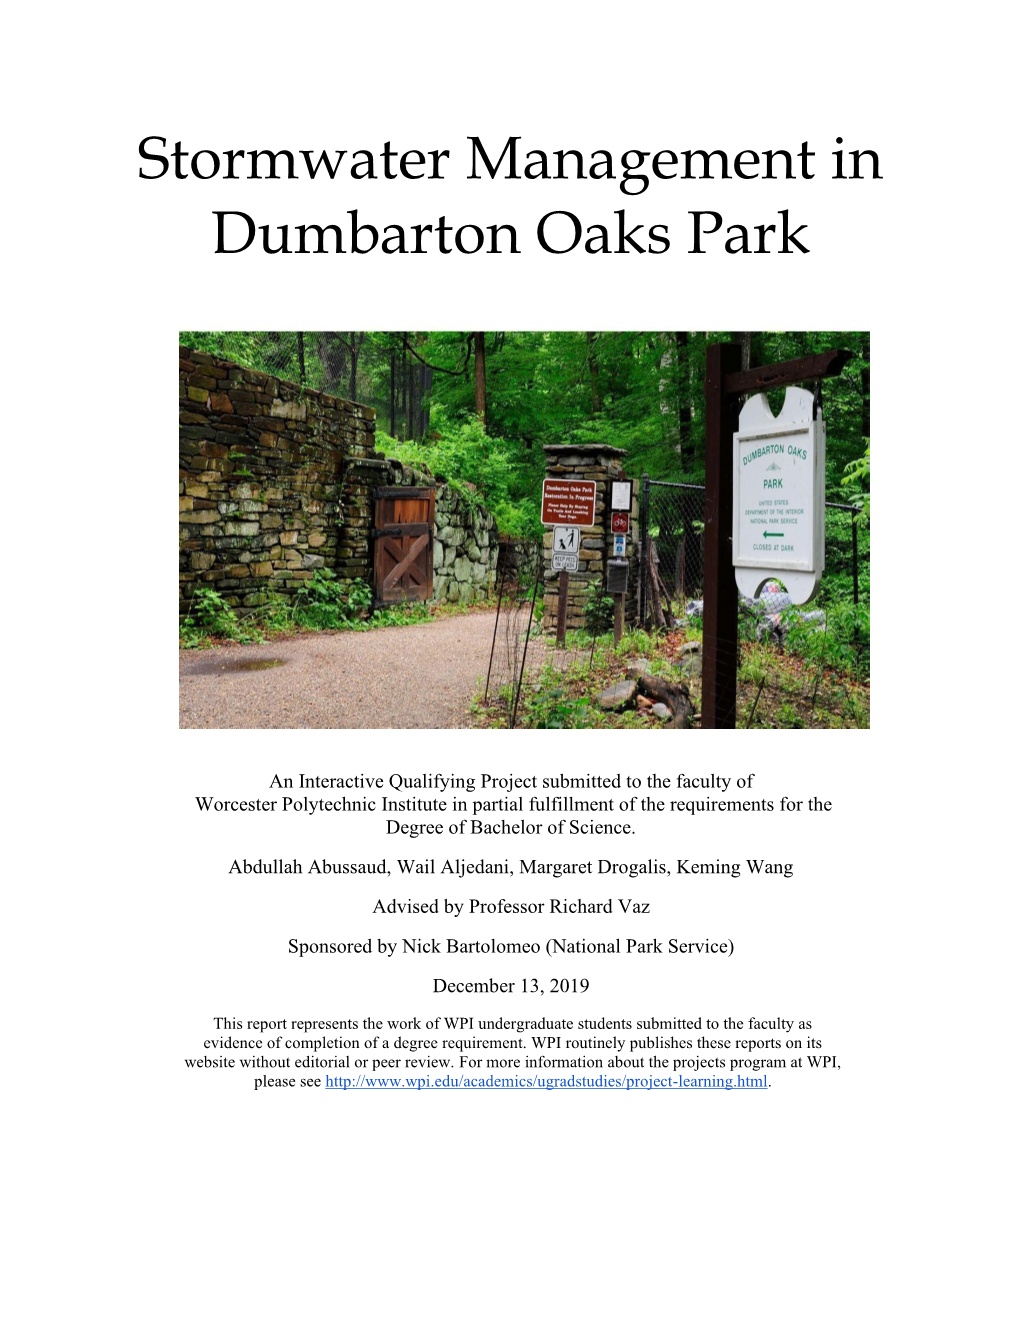 Stormwater Management in Dumbarton Oaks Park